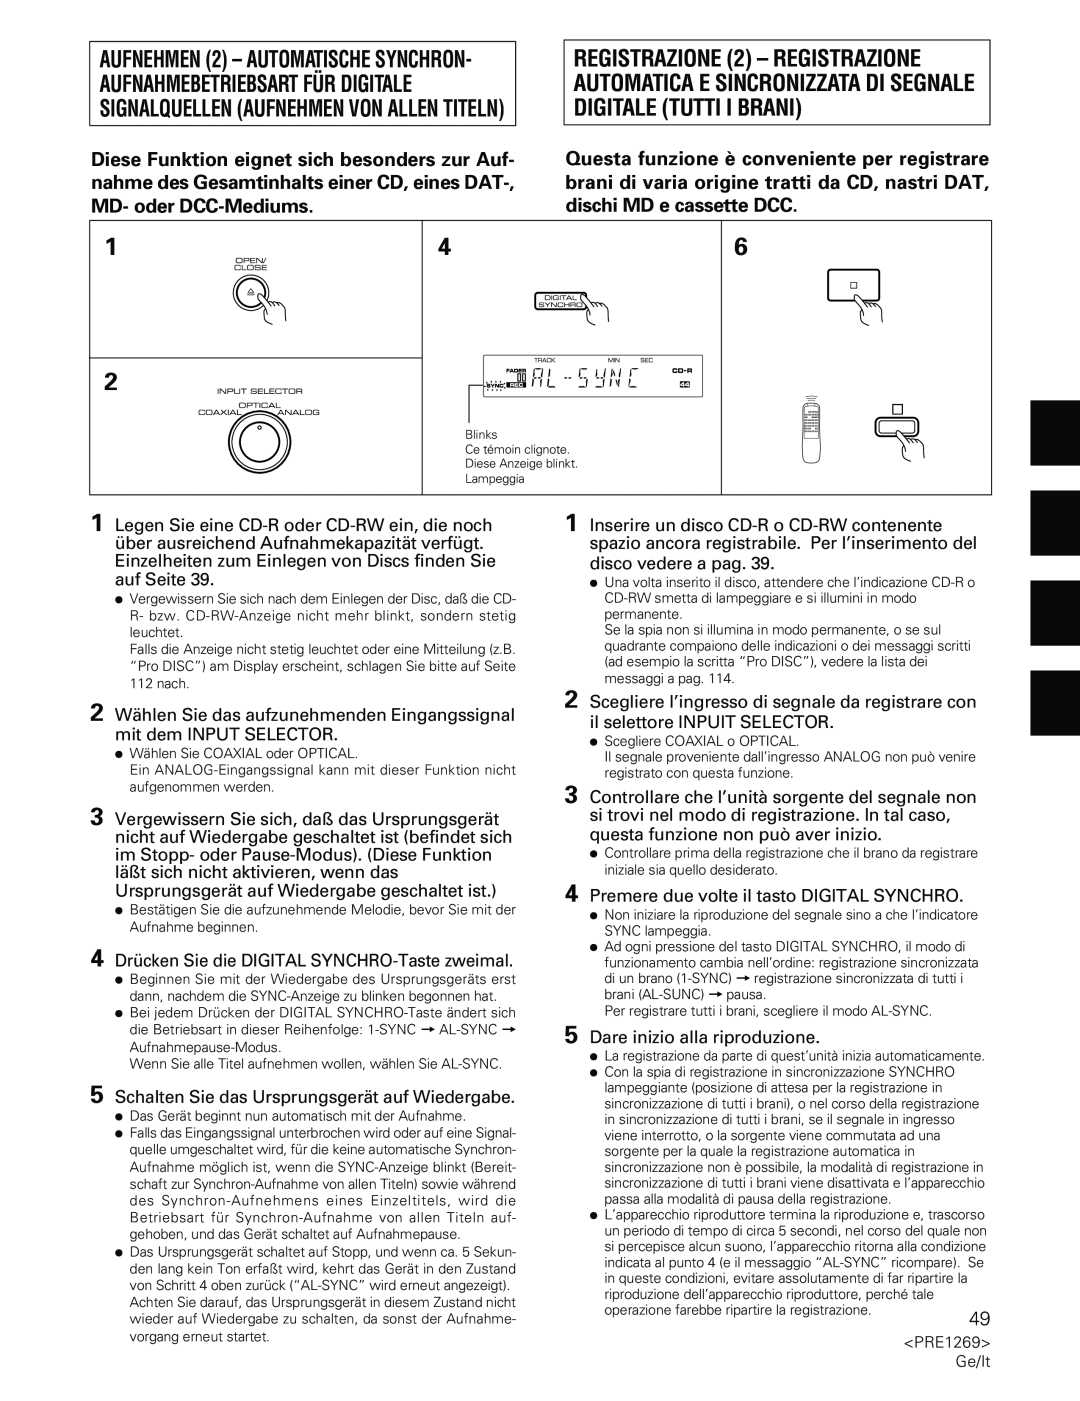 Pioneer PDR-555RW operating instructions 4 Drücken Sie die DIGITAL SYNCHRO-Tastezweimal 